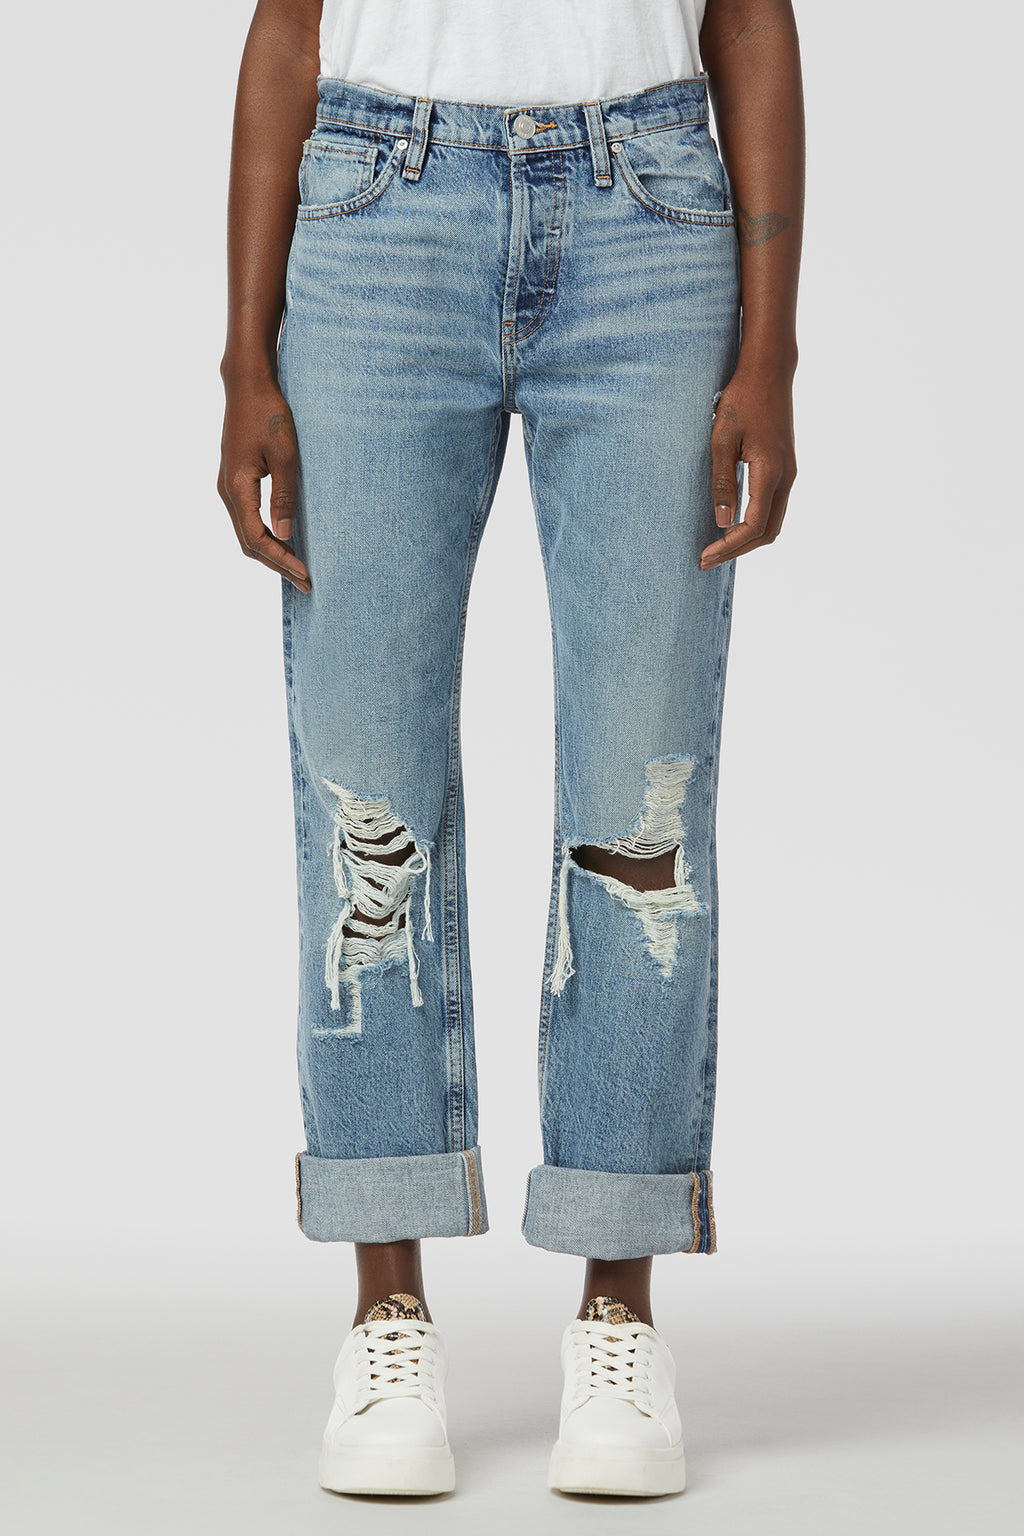 Shop Women's Denim High-Rise at Hudson Jeans | Hudson Jeans